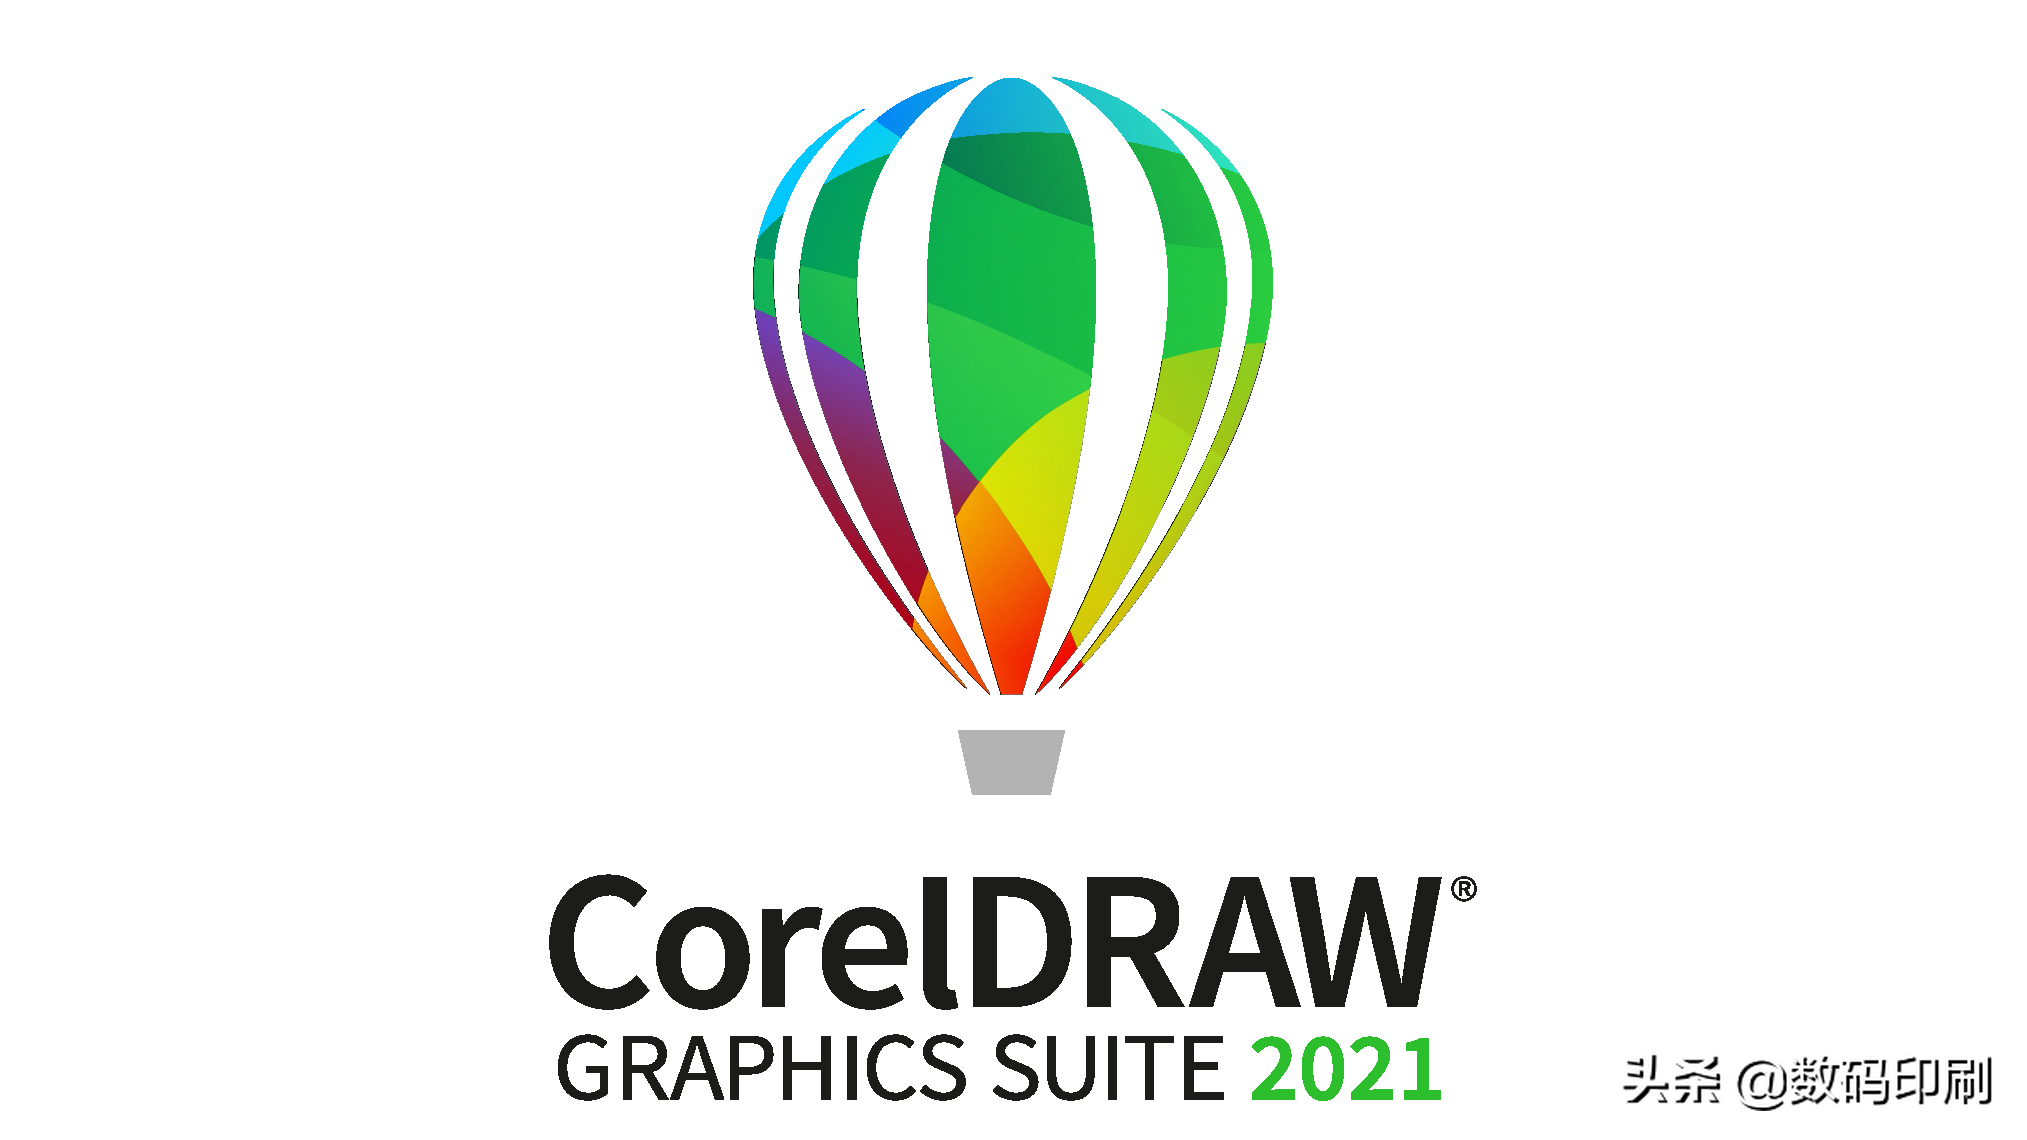 coreldraw图标logo图片